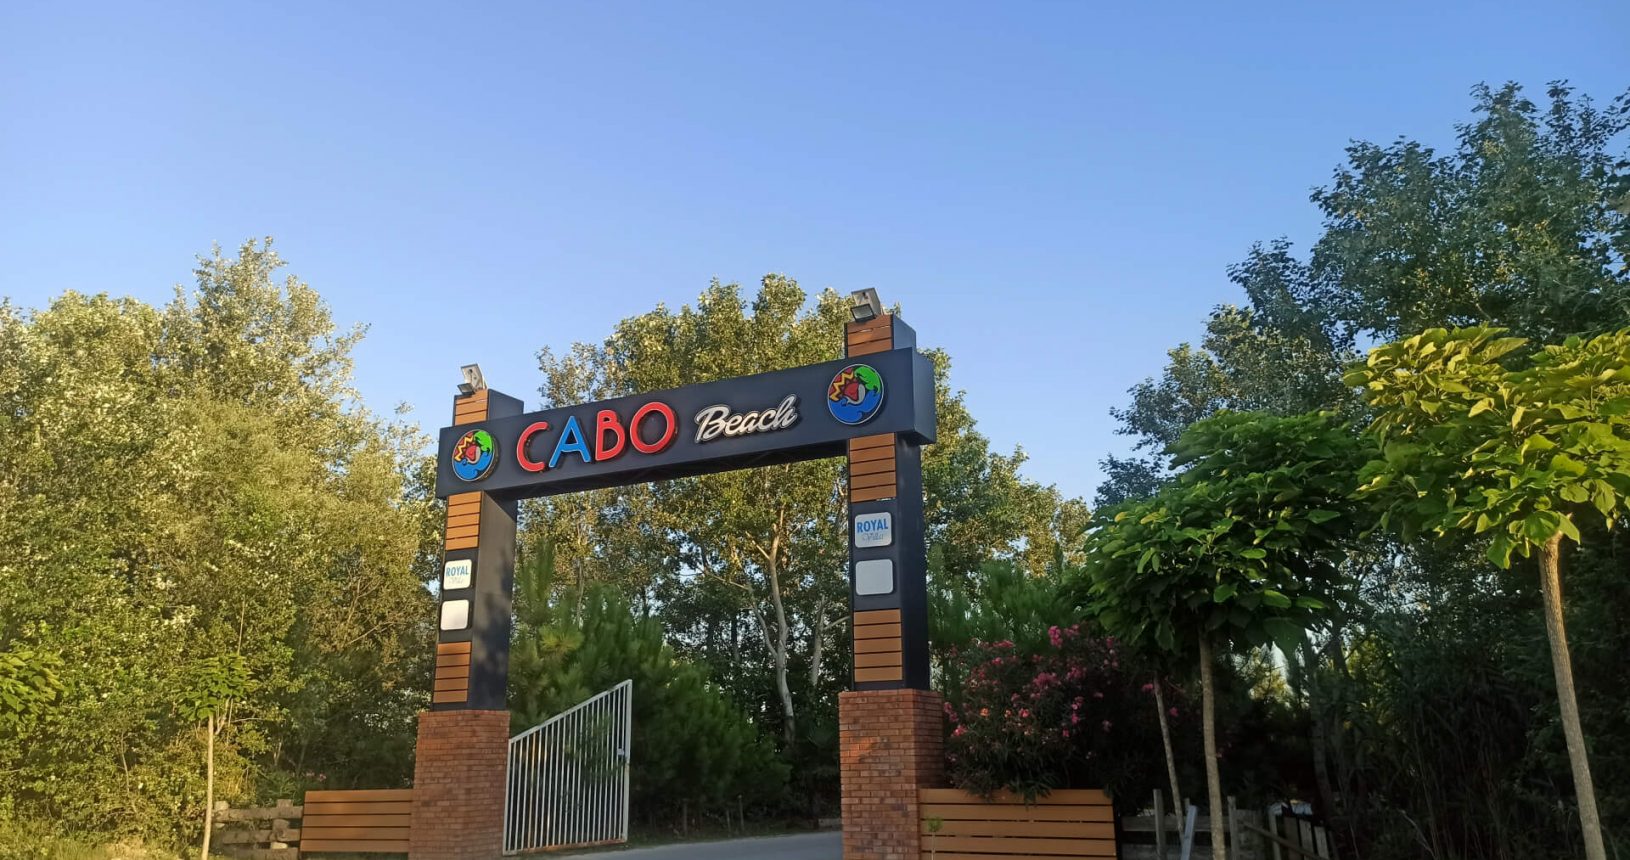 Cabo Beach entrance for cars